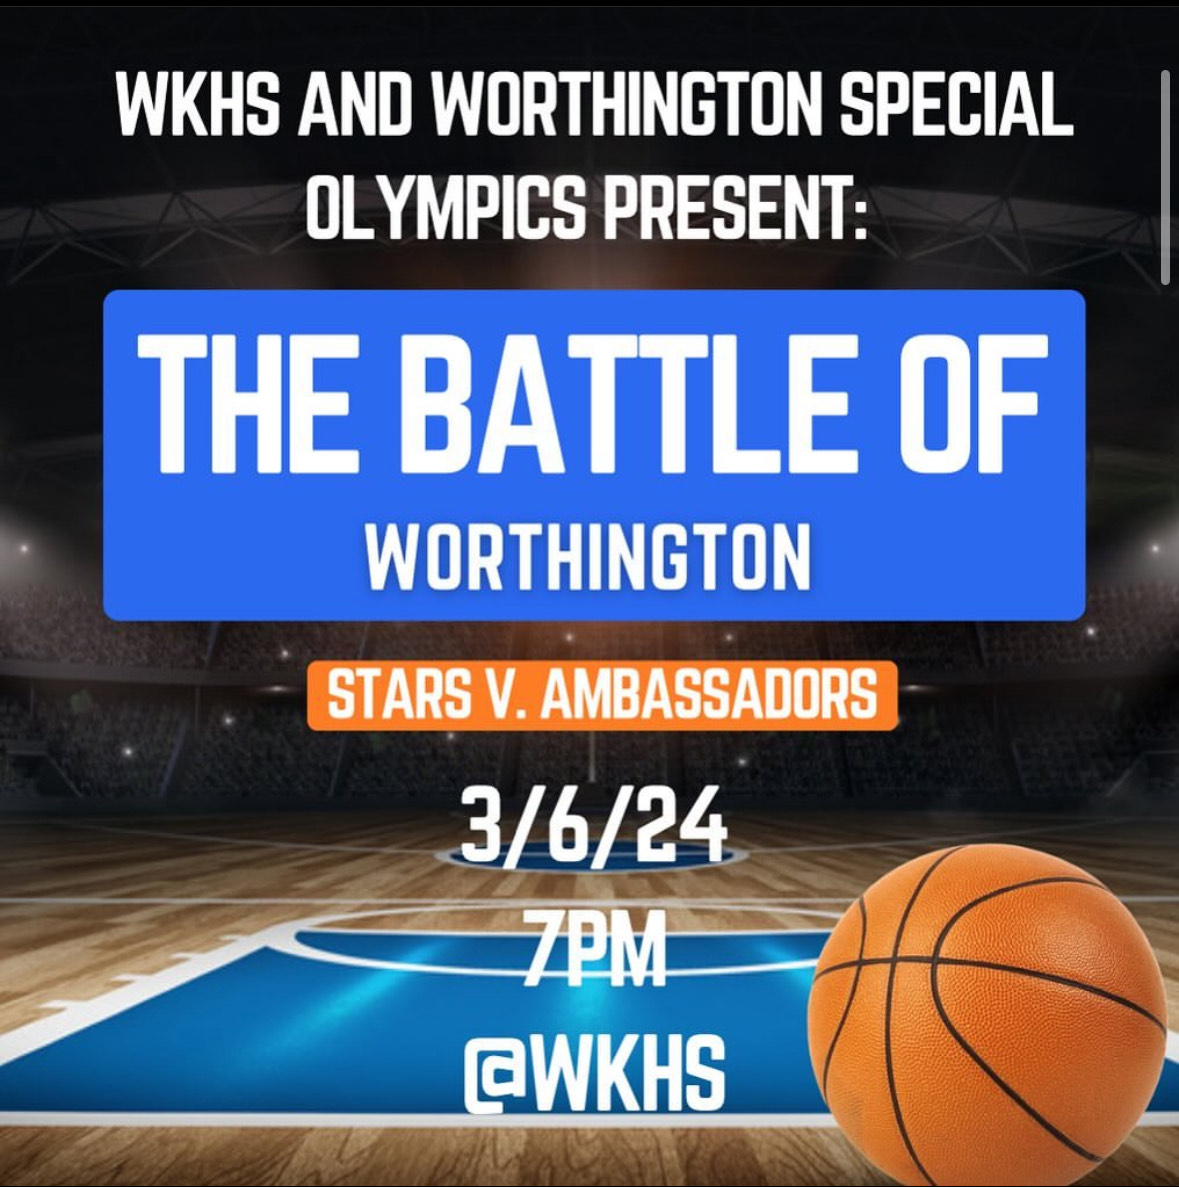 Worthington+Stars+Special+Olympics+Basketball+Game